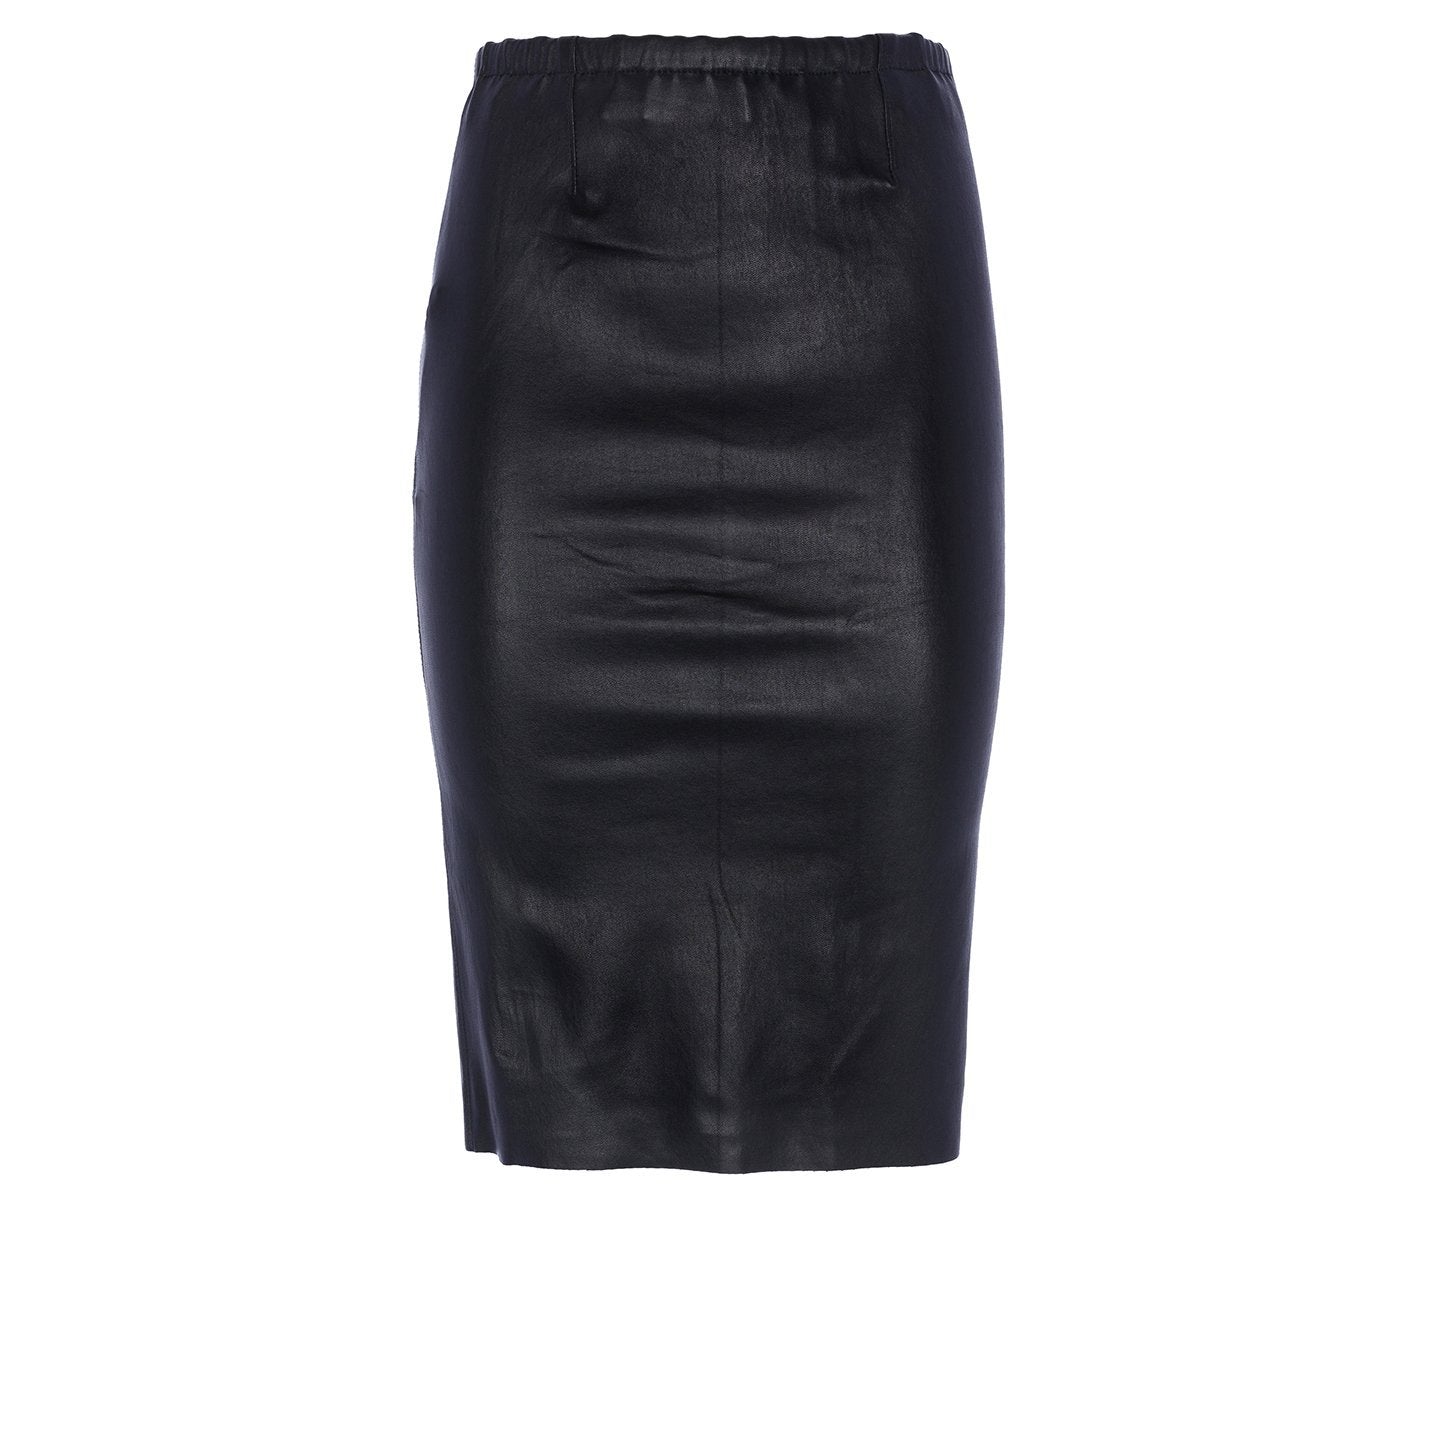 Designer black leather pencil skirt by MON&PAU